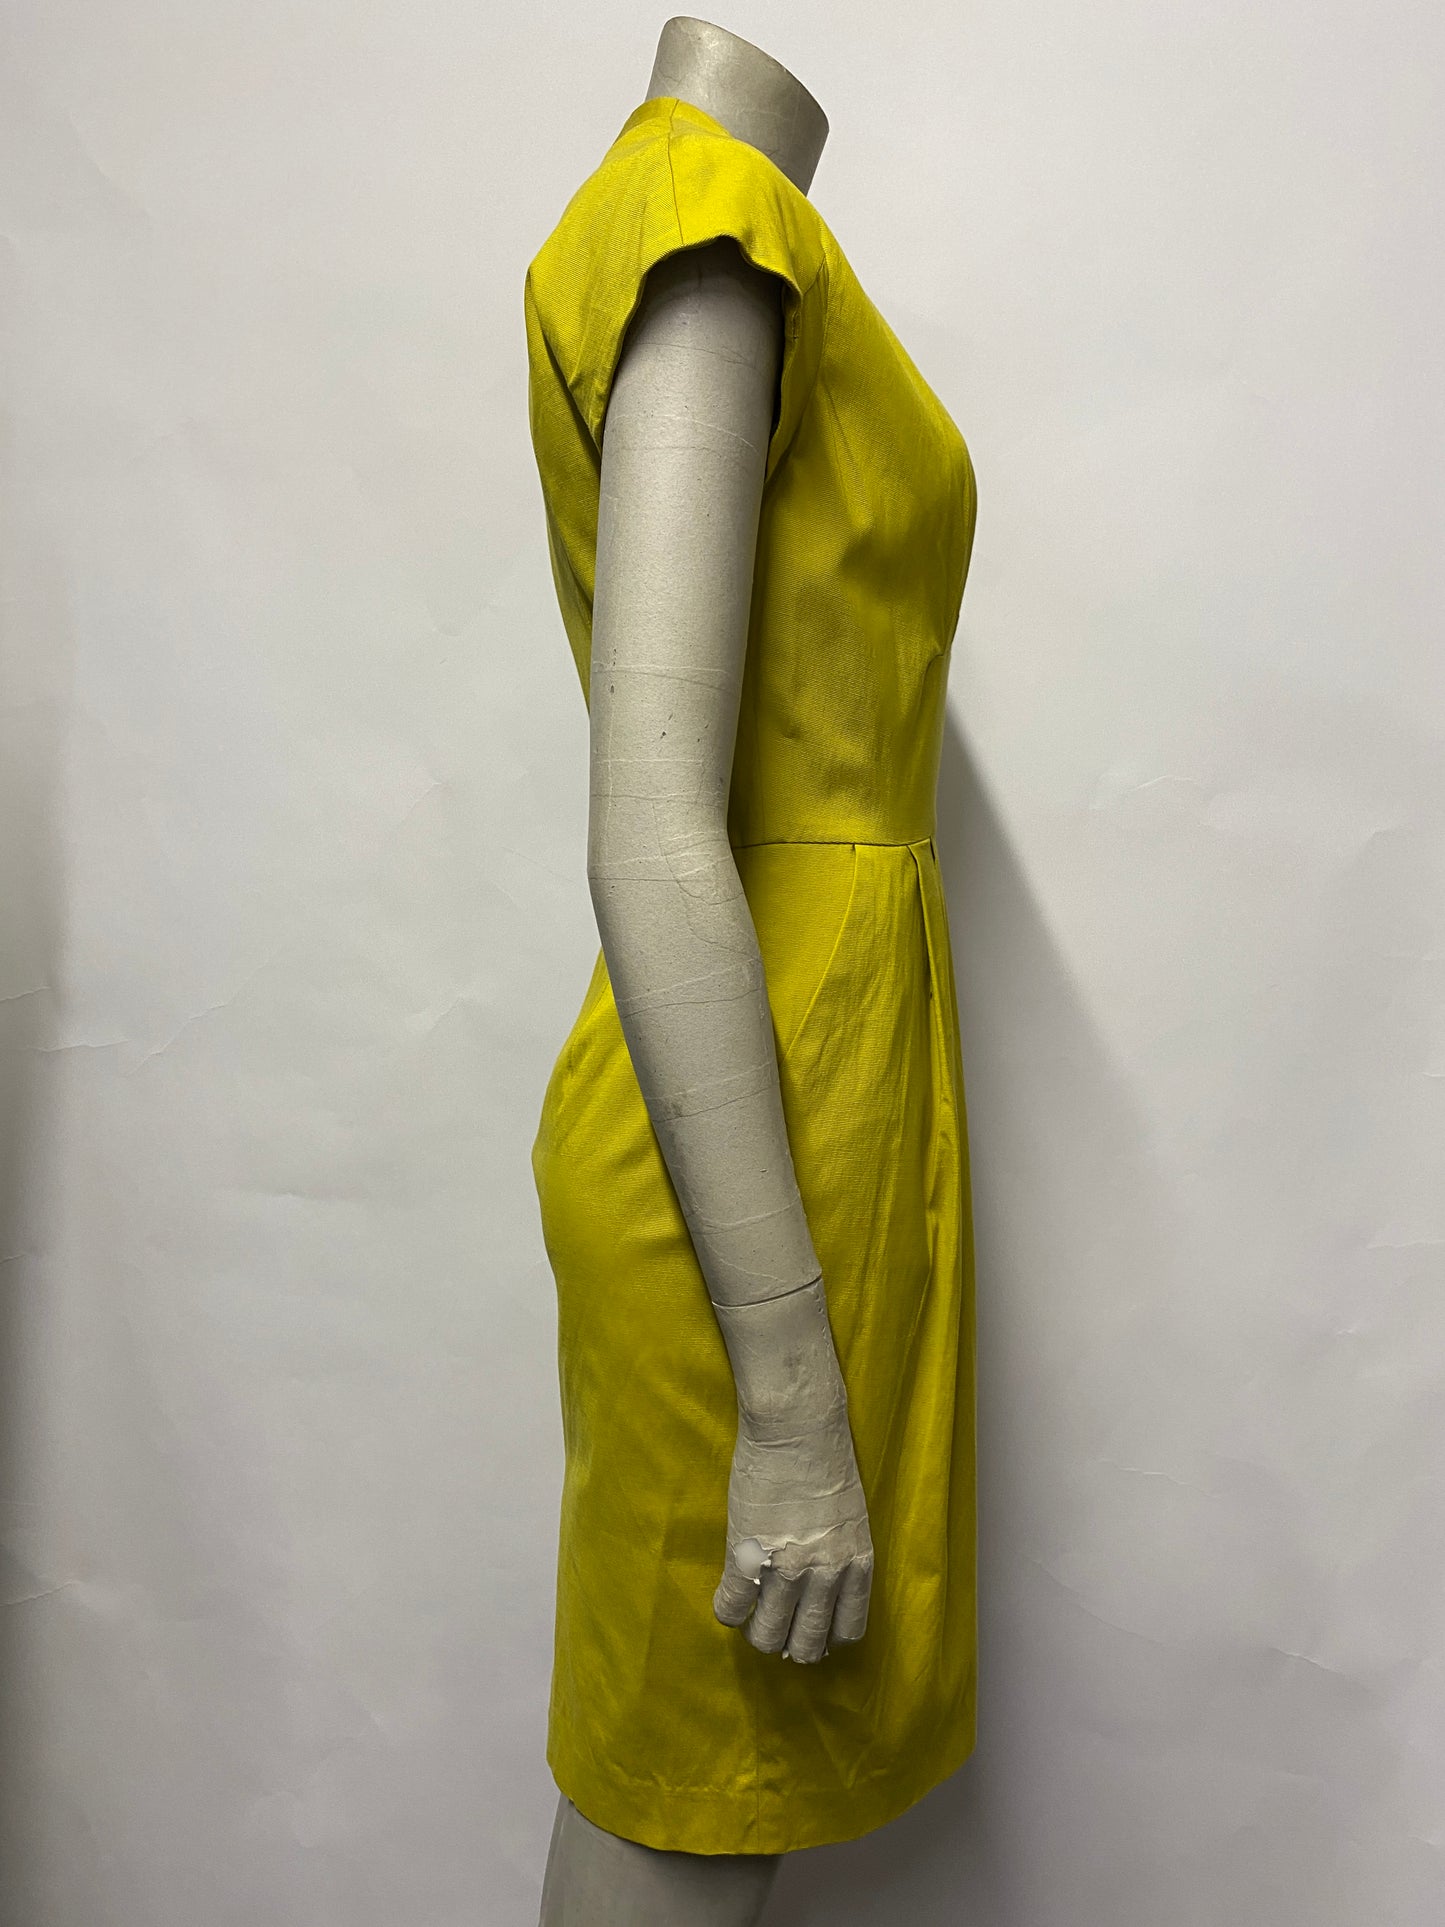 Reiss Yellow V-neck Cap Sleeve Mini Dress 10